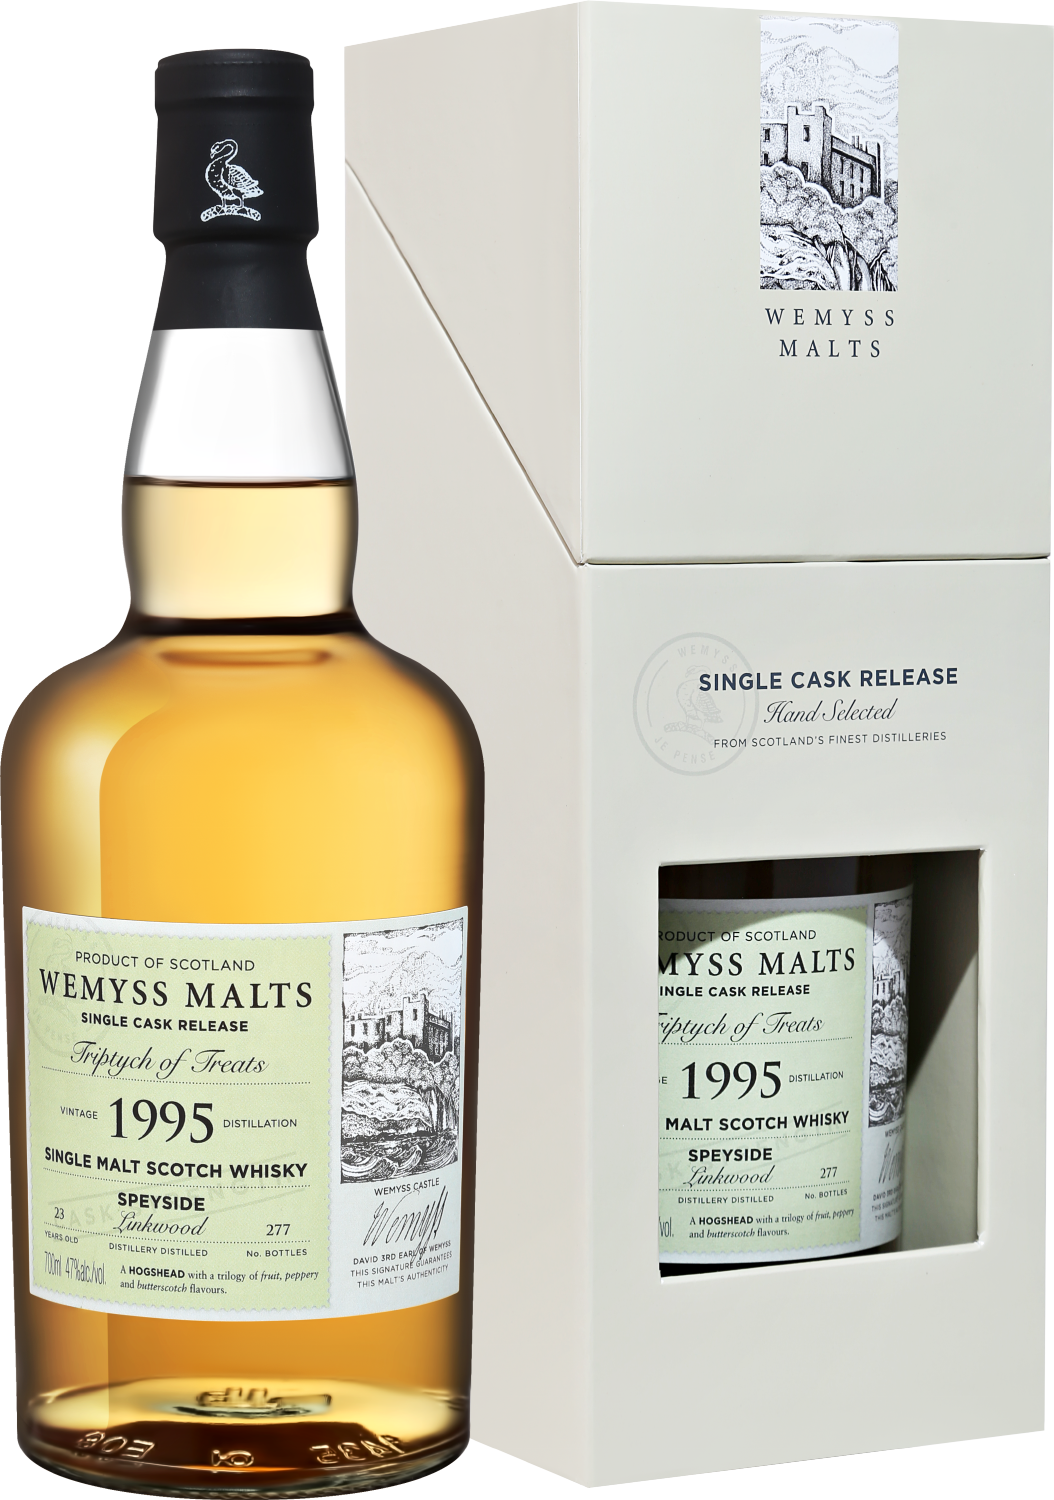 Wemyss Malts Triptych Of Treats Linkwood 1995 Speyside Single Cask Single Malt Scotch Whisky 23 y.o. (gift box) 55037